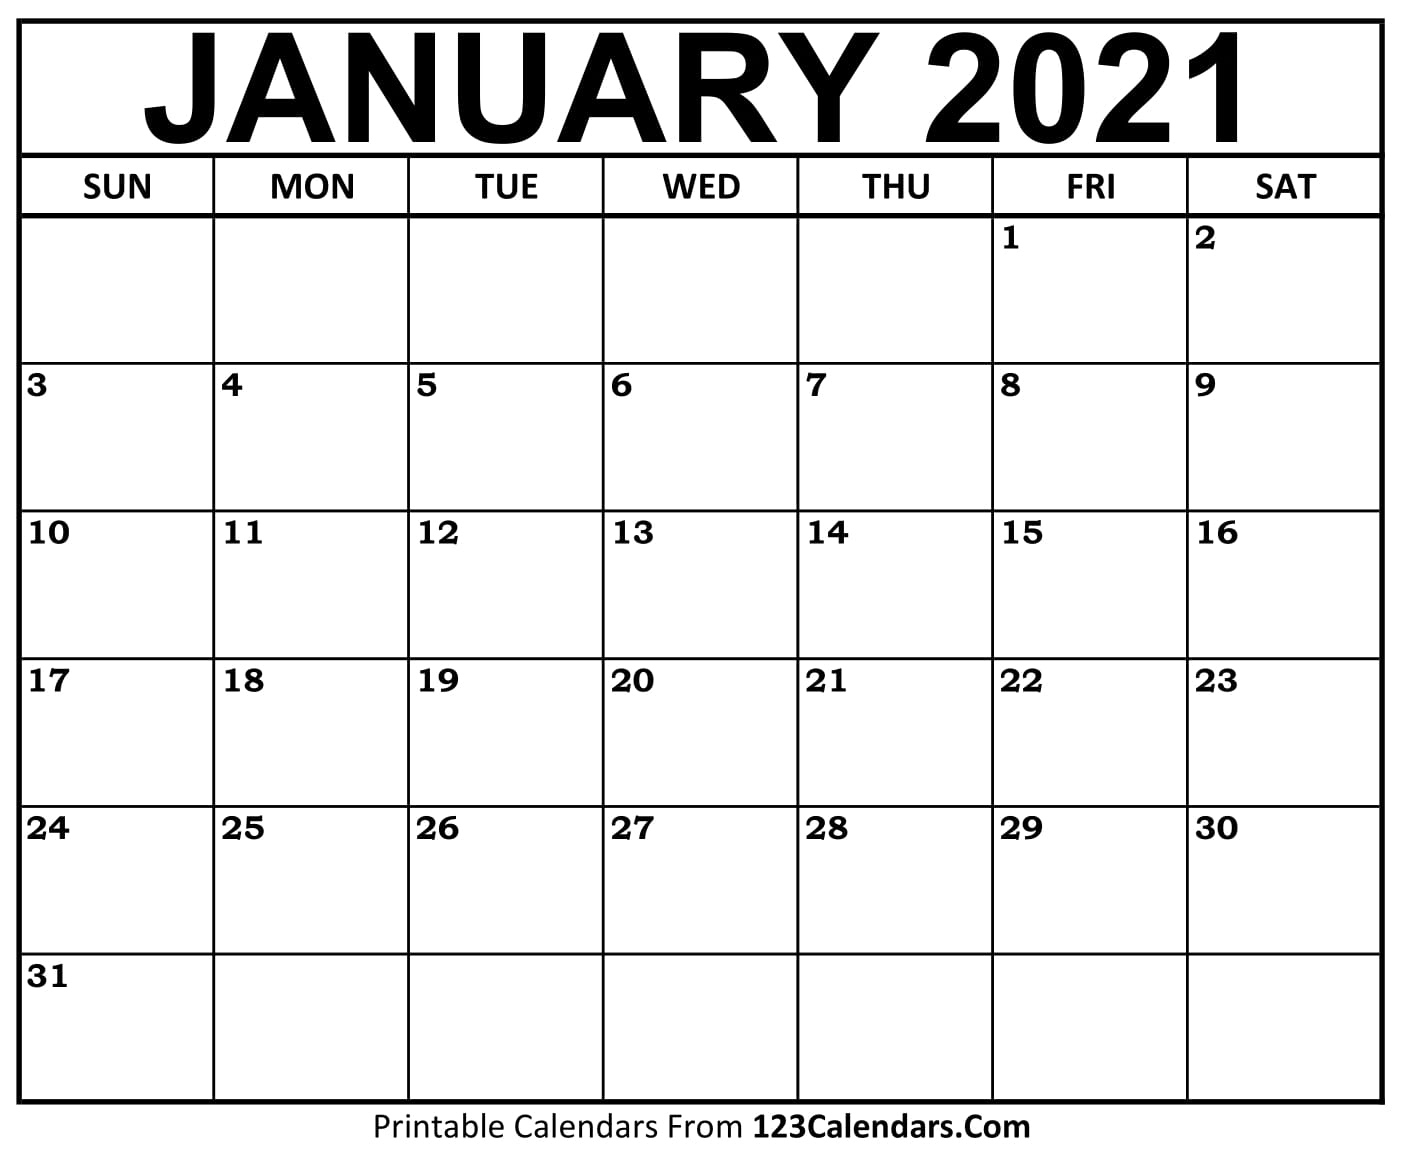 2021 Printable Calendar | 123Calendars Blank Monthly Calendar 2021